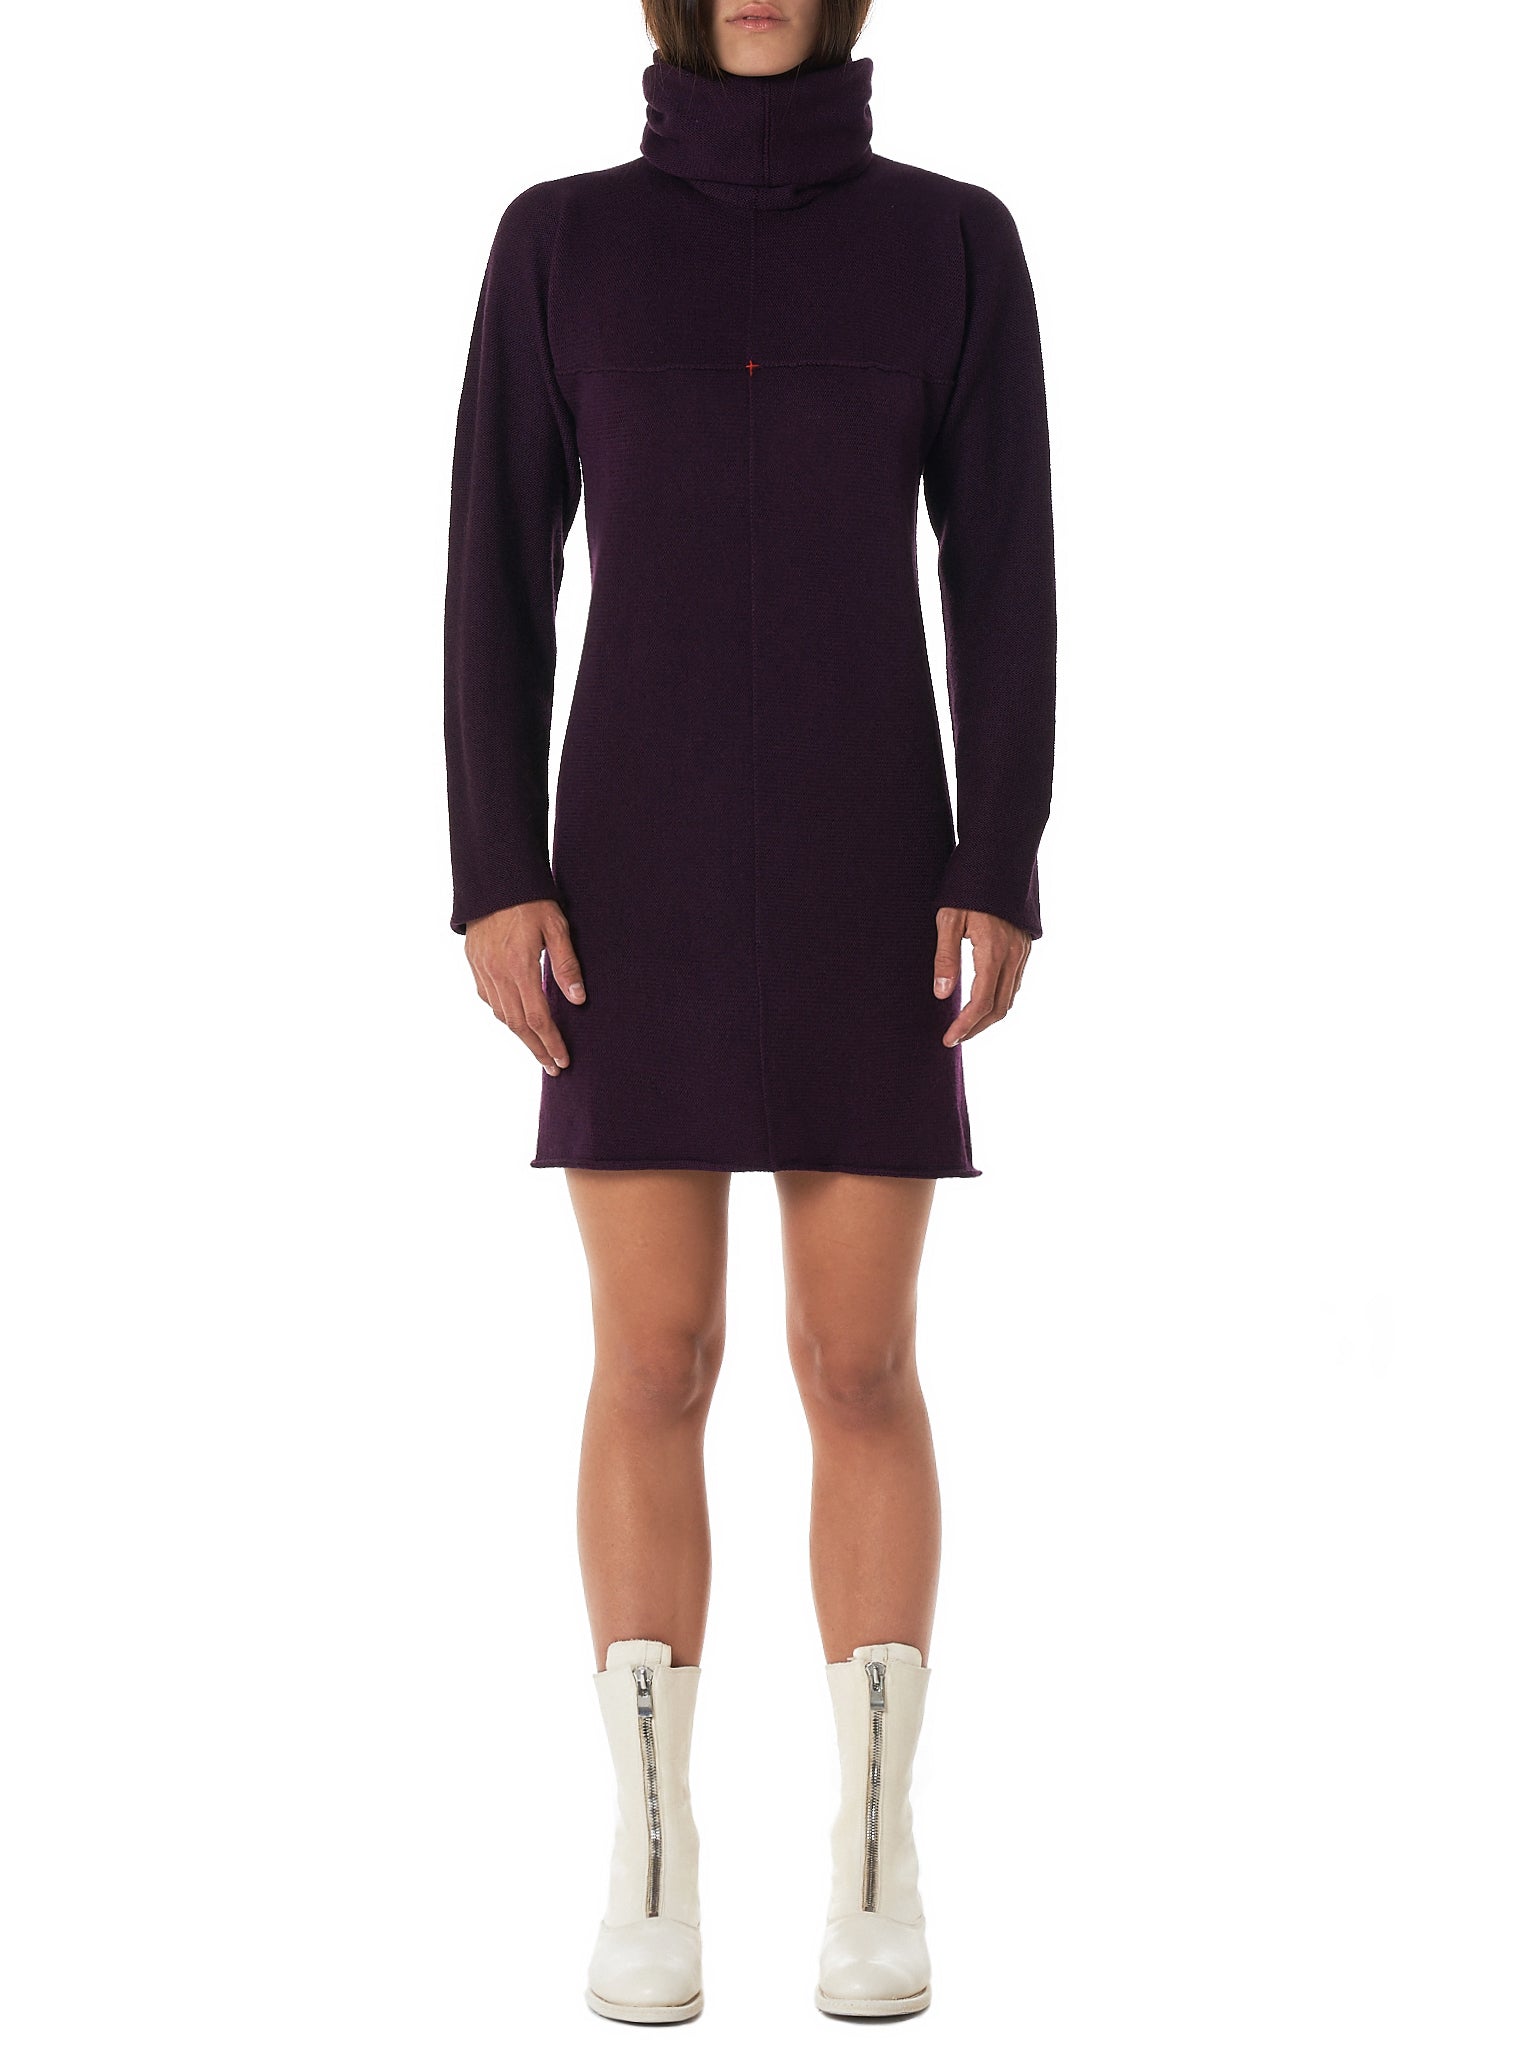 Single Cut Turtleneck Dress (NTW221DNL-FMW1-WINE)